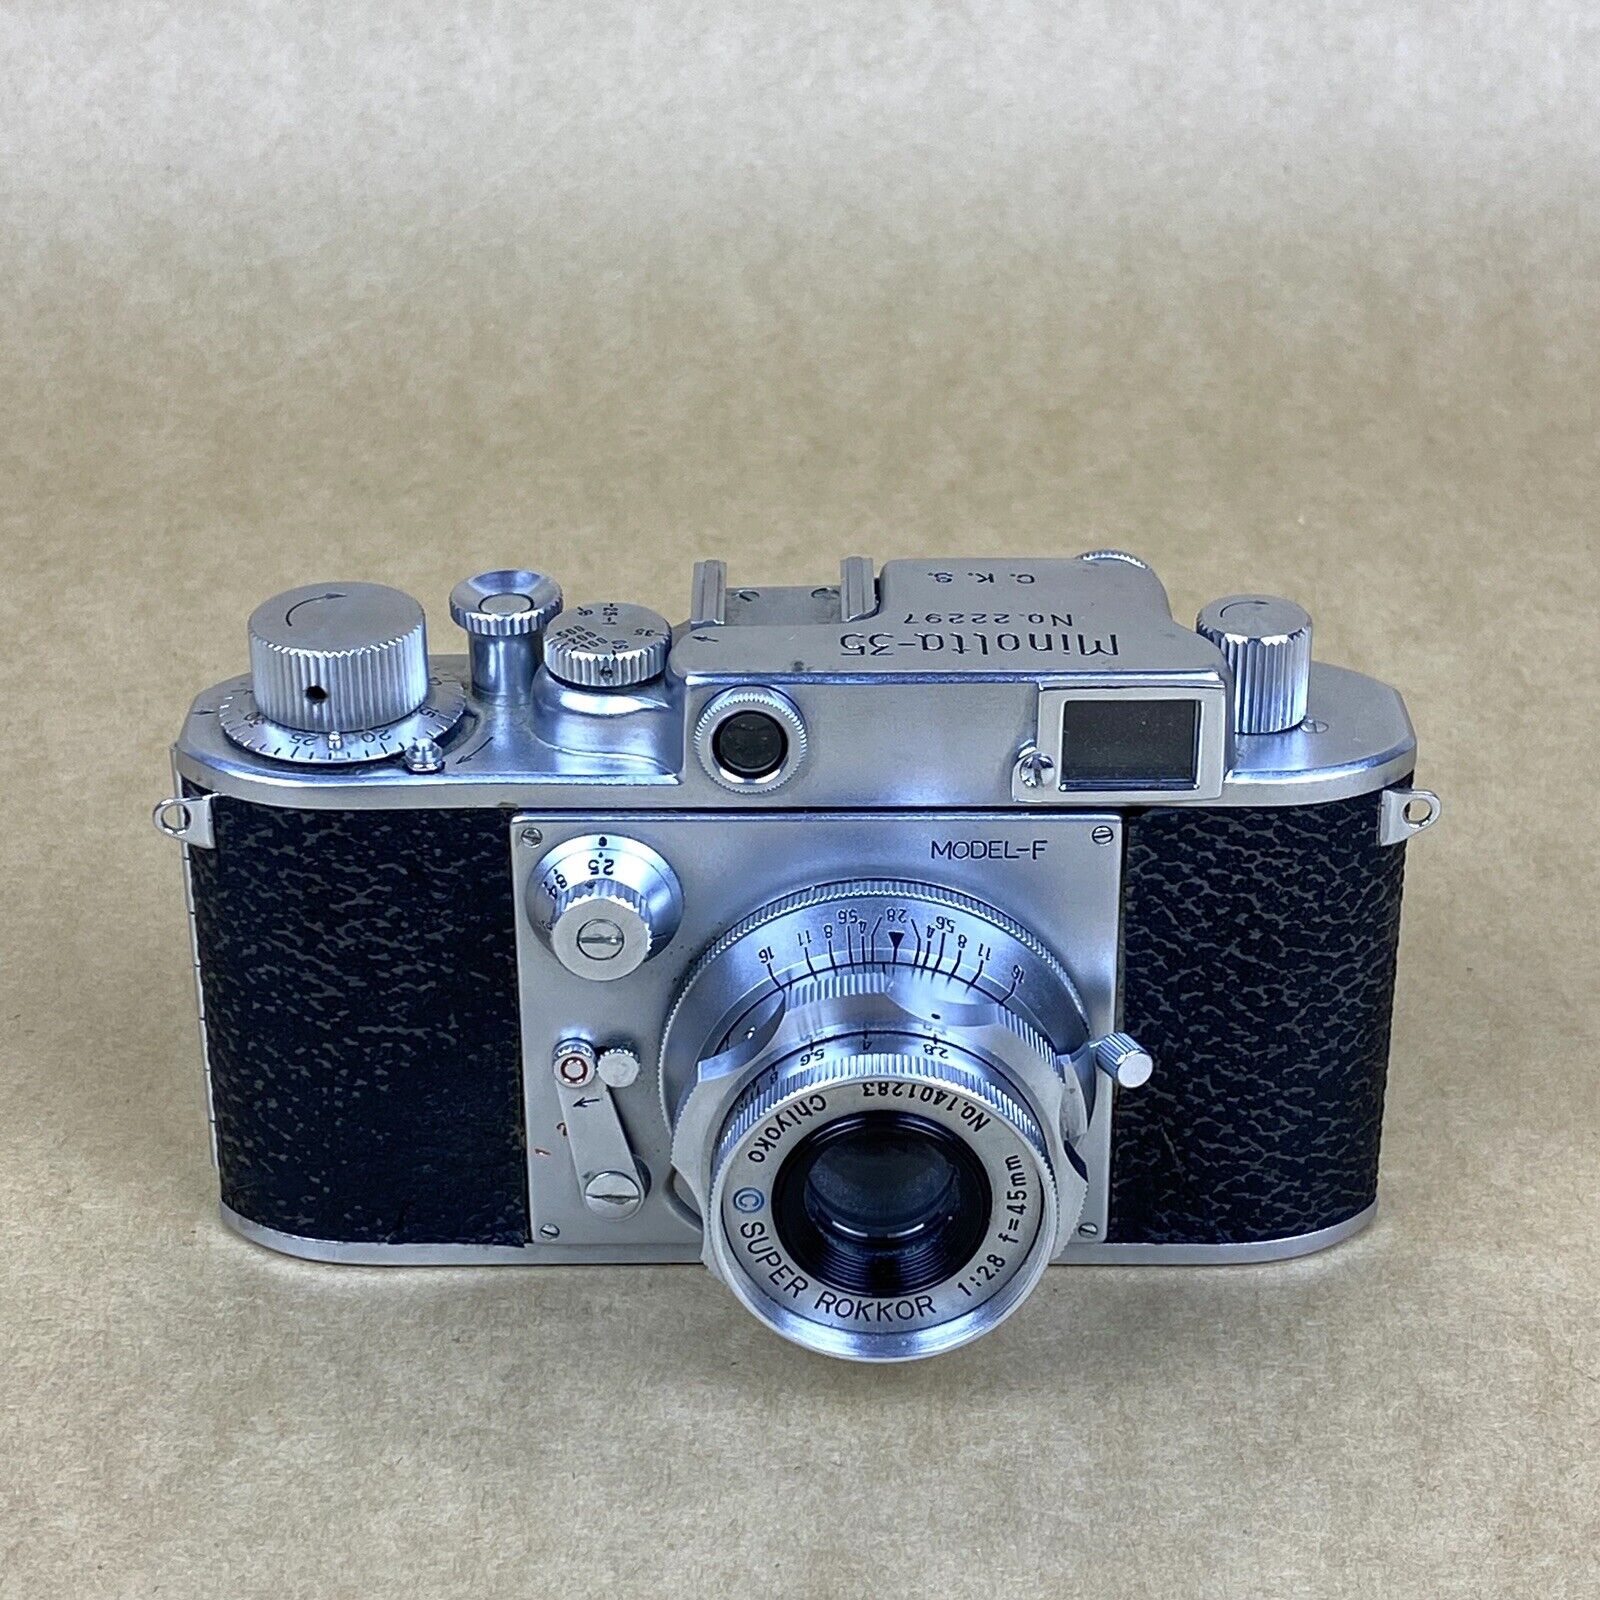 Minolta-35 Model-F 35mm Rangefinder Film Camera No. 22297 W/ 45mm 